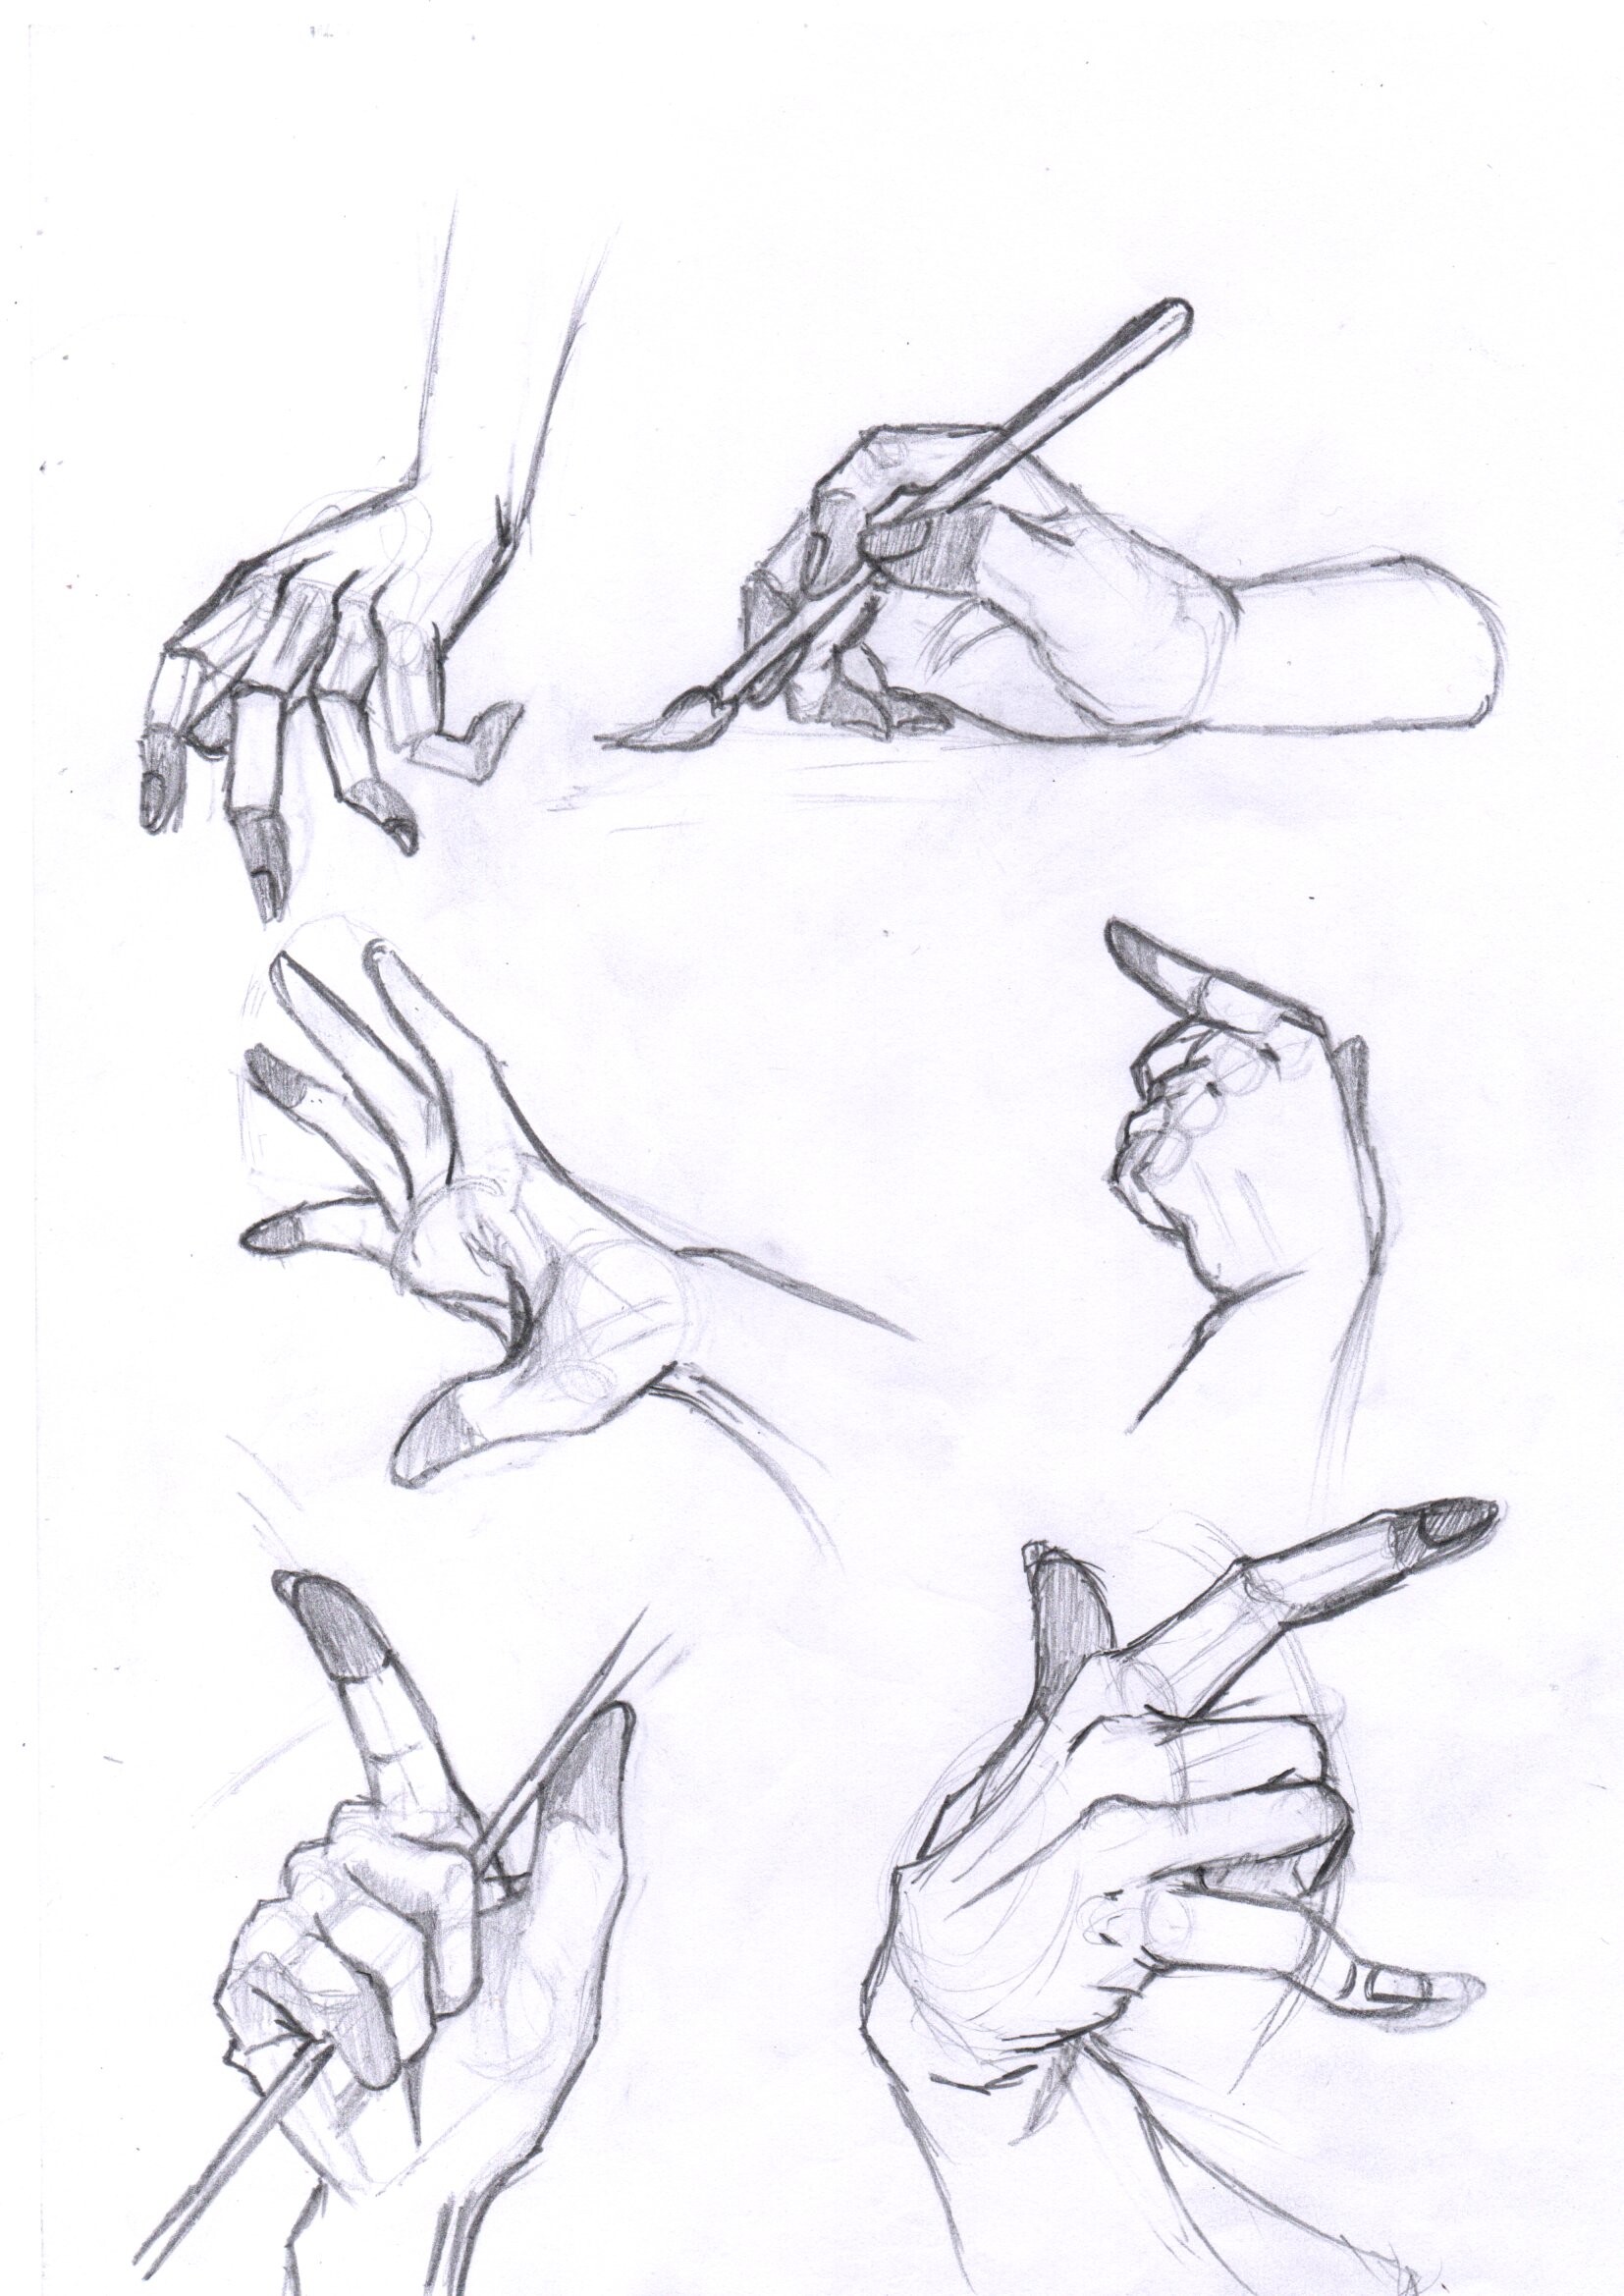 ArtStation - Hand sketches